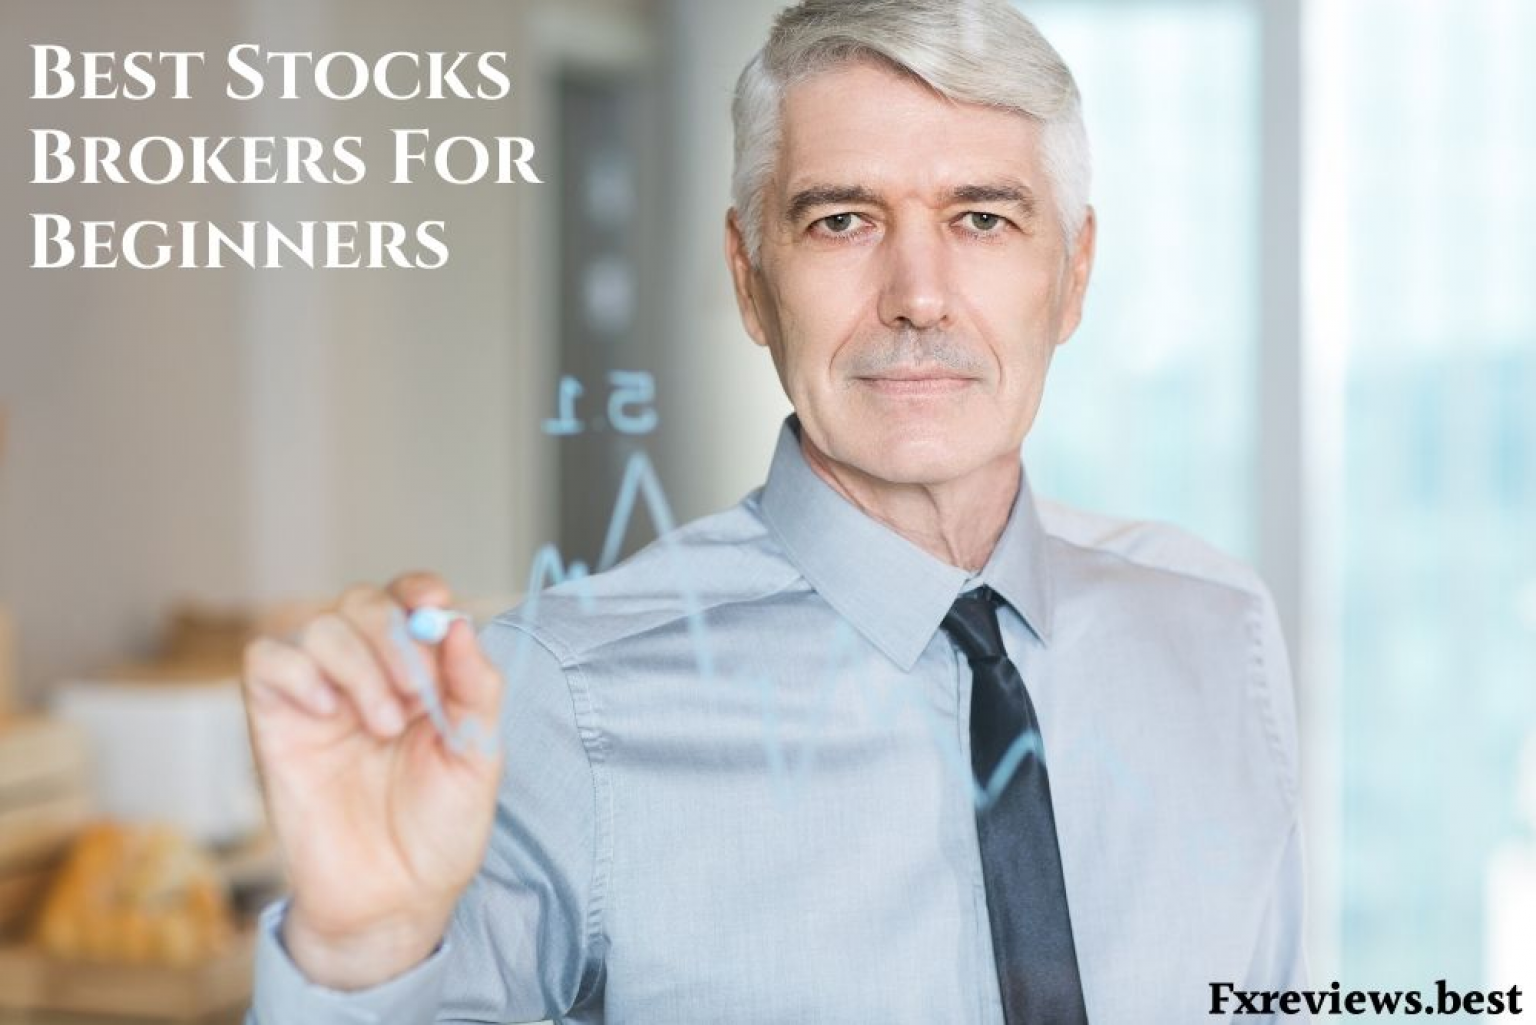 Top 10 Stock Brokers For Beginners - Fxreviews.best